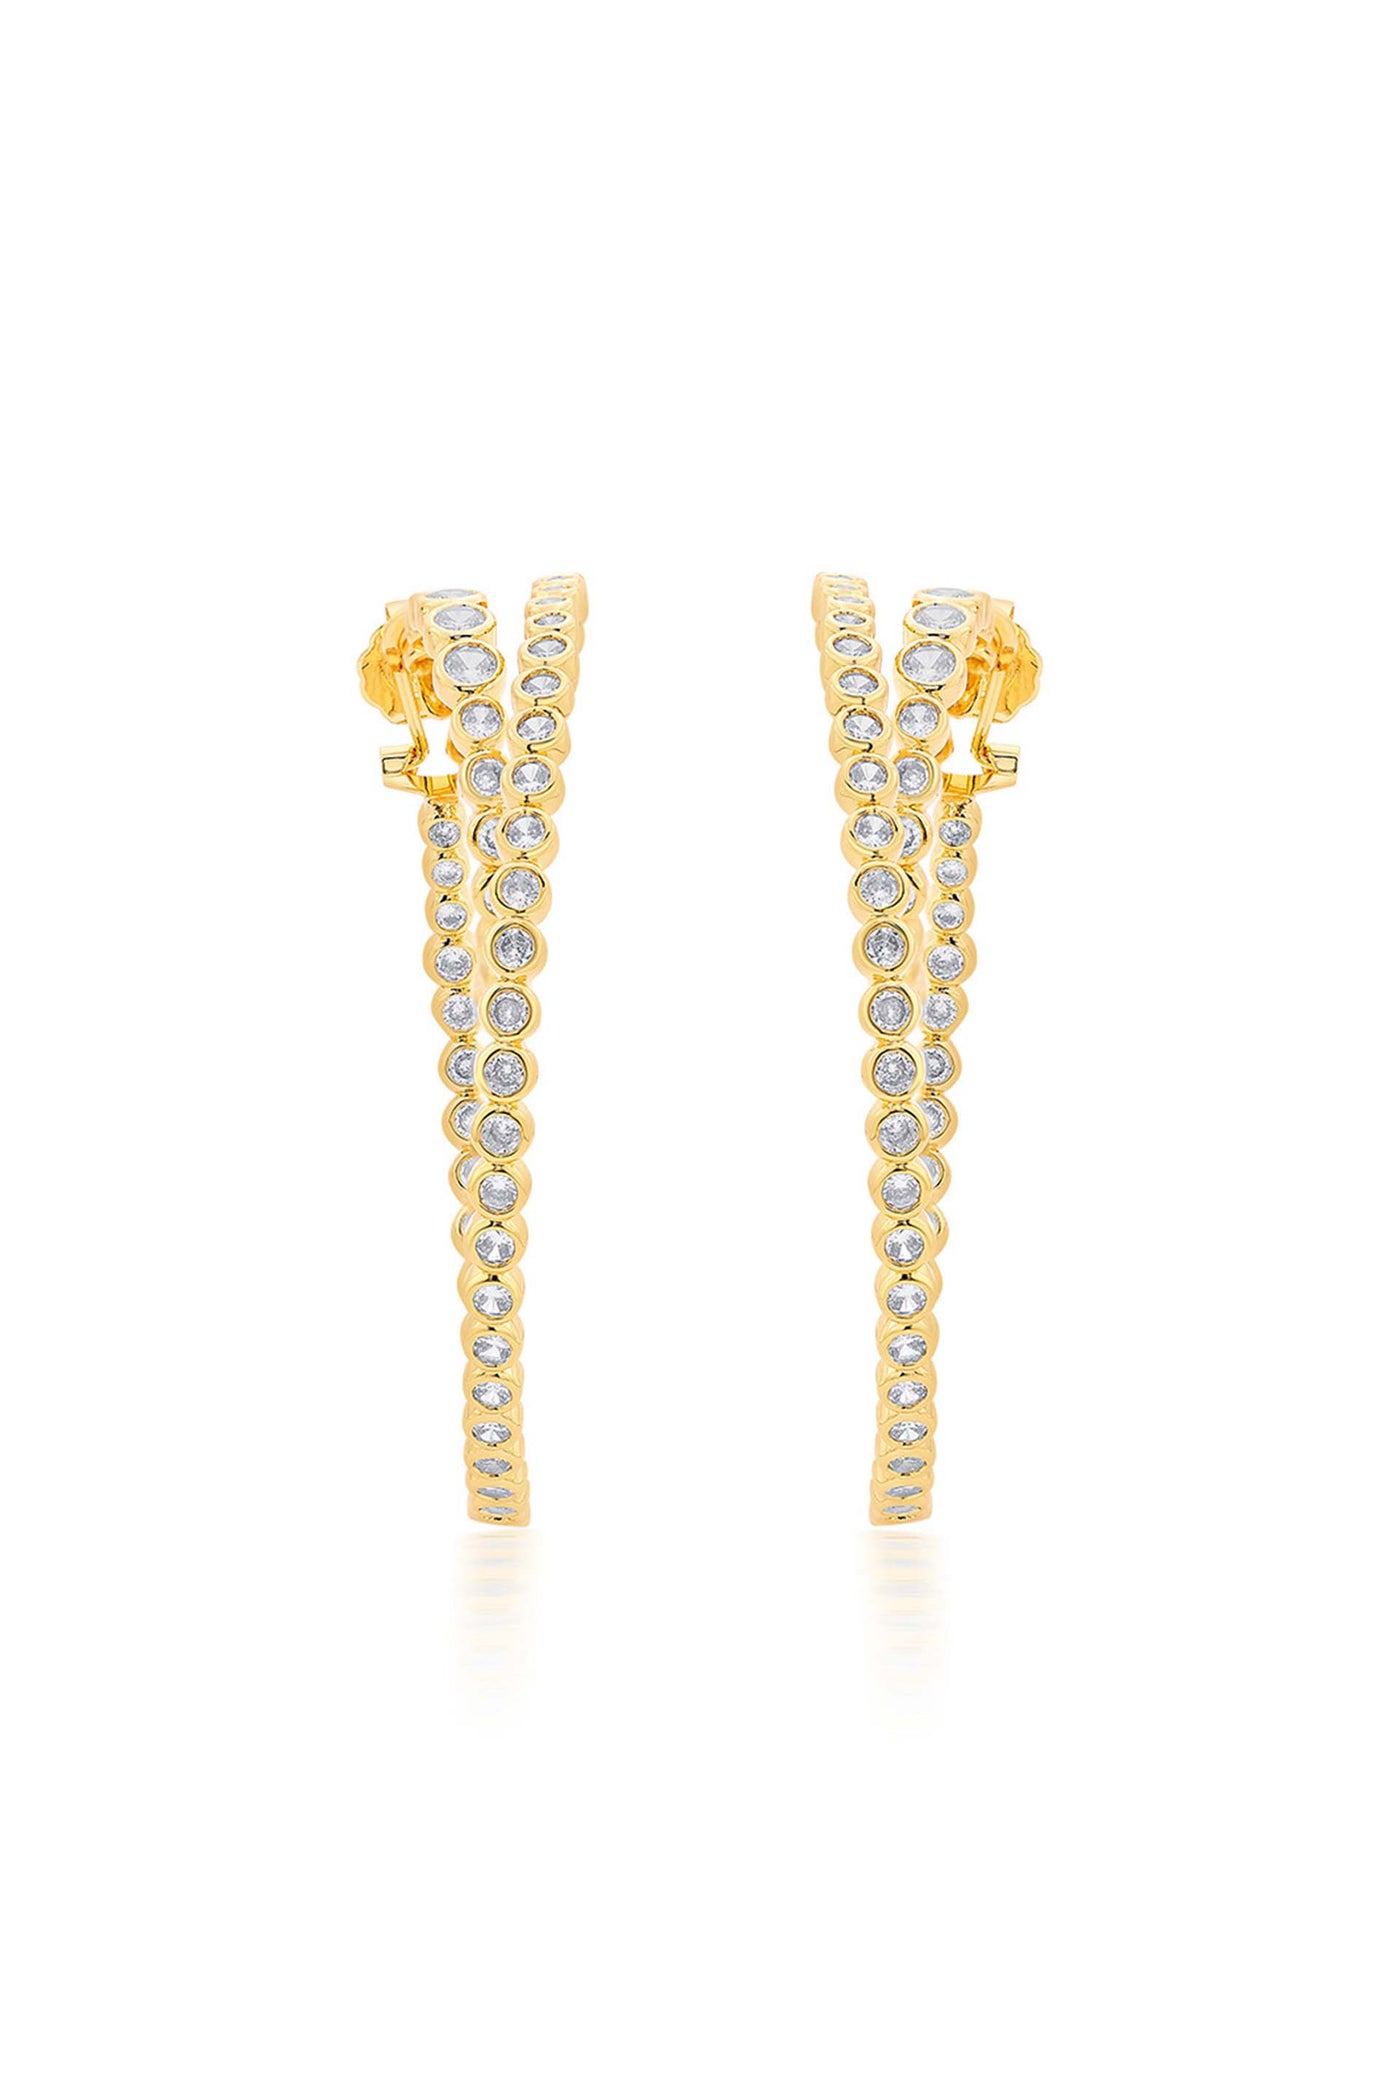 Isharya Aura Gold Swirl Hoop Earrings In 18kt Gold Plated fashion jewellery online shopping melange singapore indian designer wear